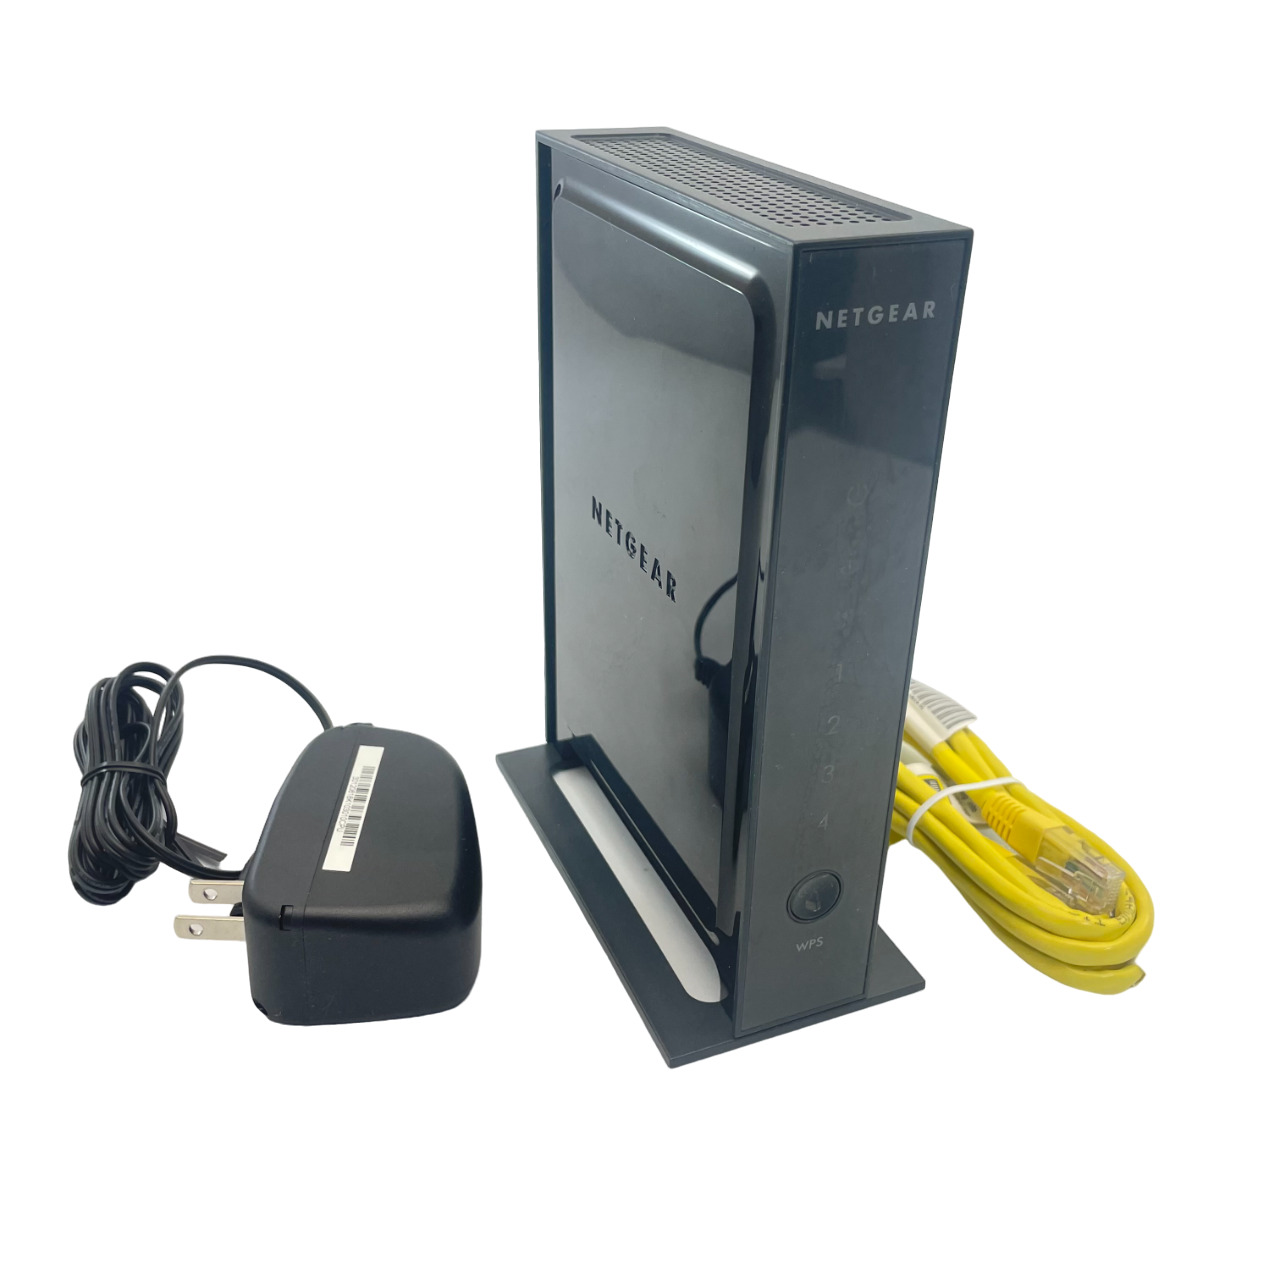 Netgear WNR2000 N300 v.3 Wireless DSL Router Modem plus Ethernet Cable